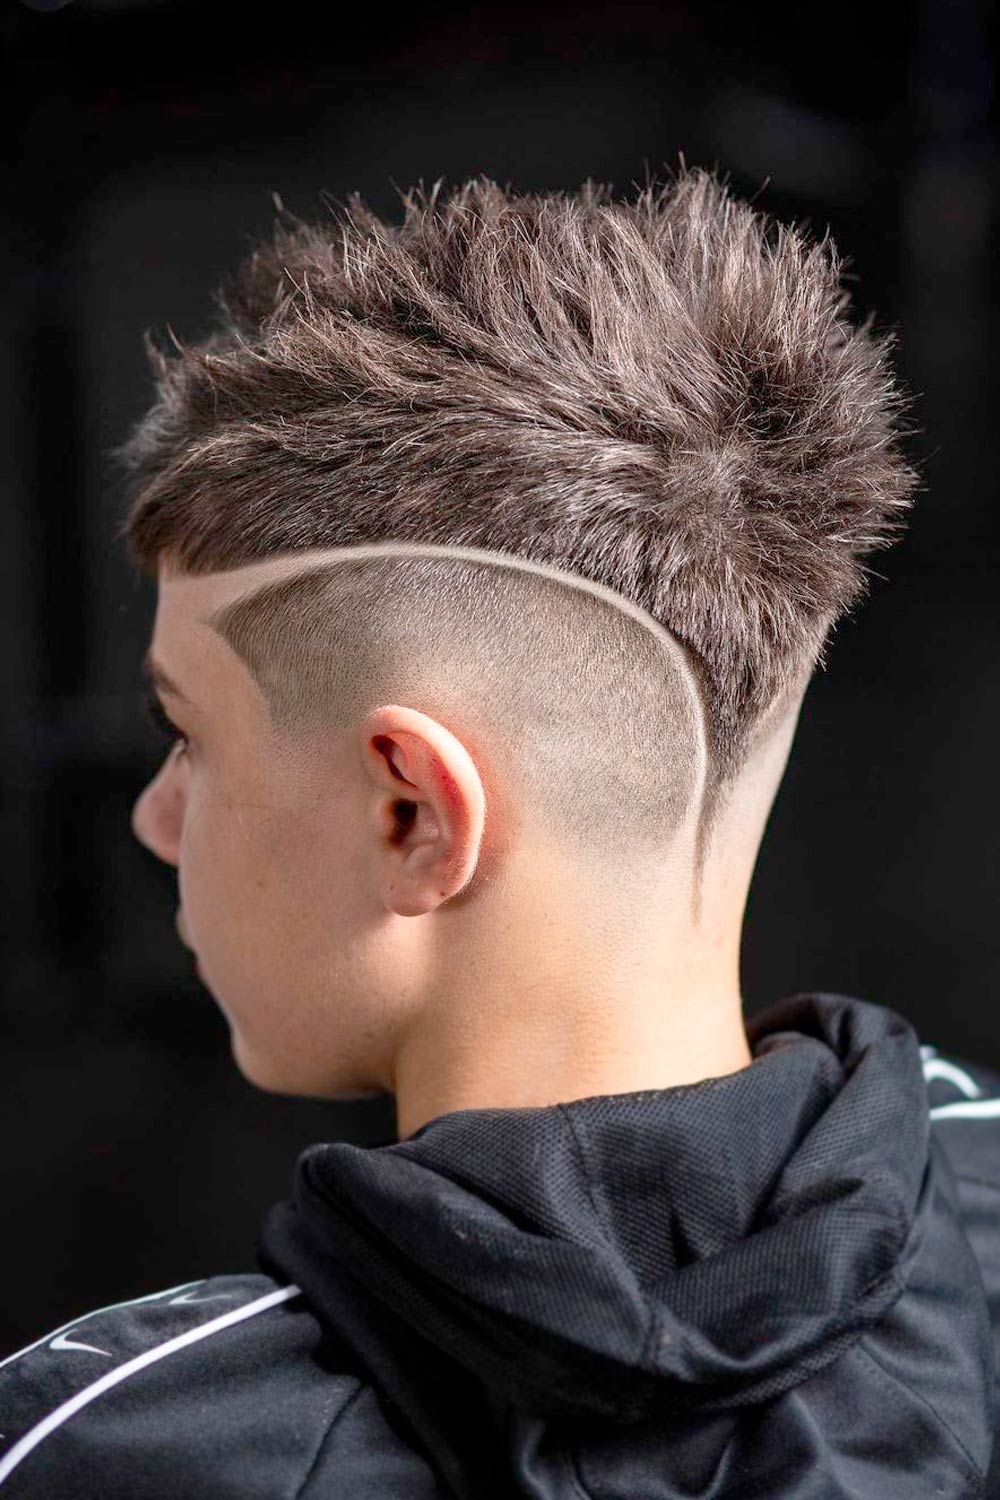 2,039 Close Young Boys Hair Cut Images, Stock Photos & Vectors |  Shutterstock